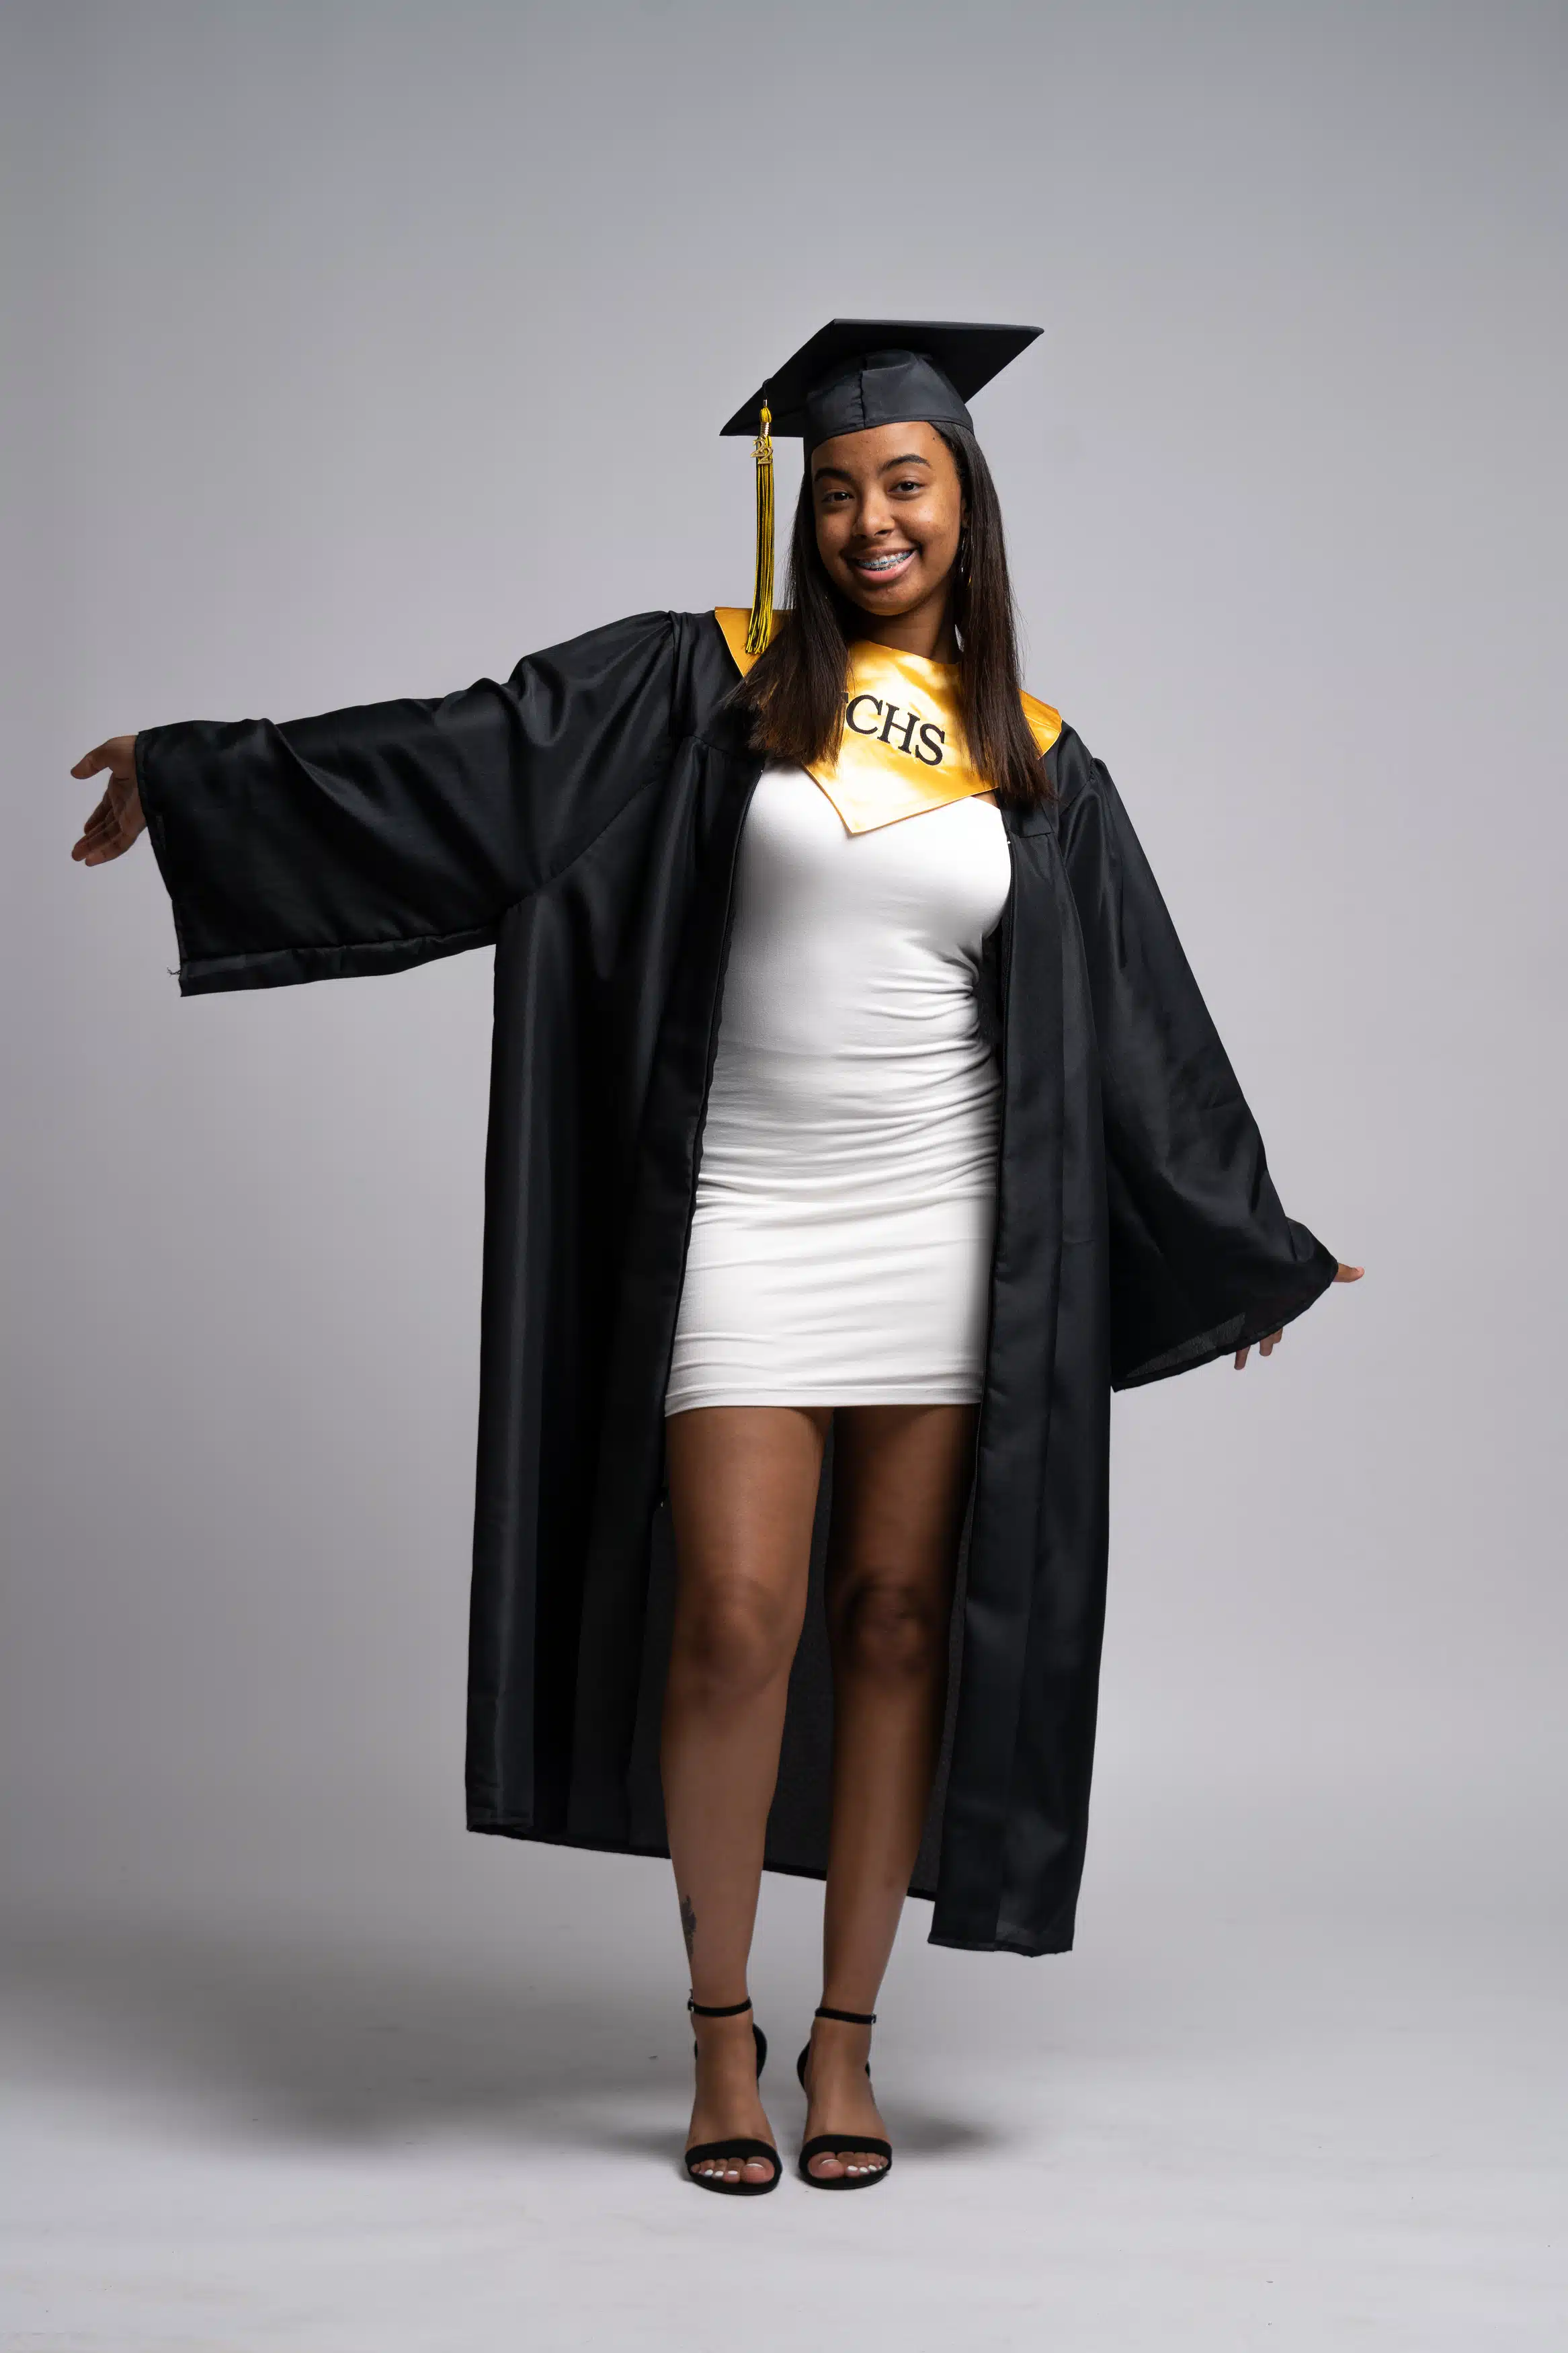 Graduation Photos | Graduation photography poses, Girl graduation pictures, Graduation  poses